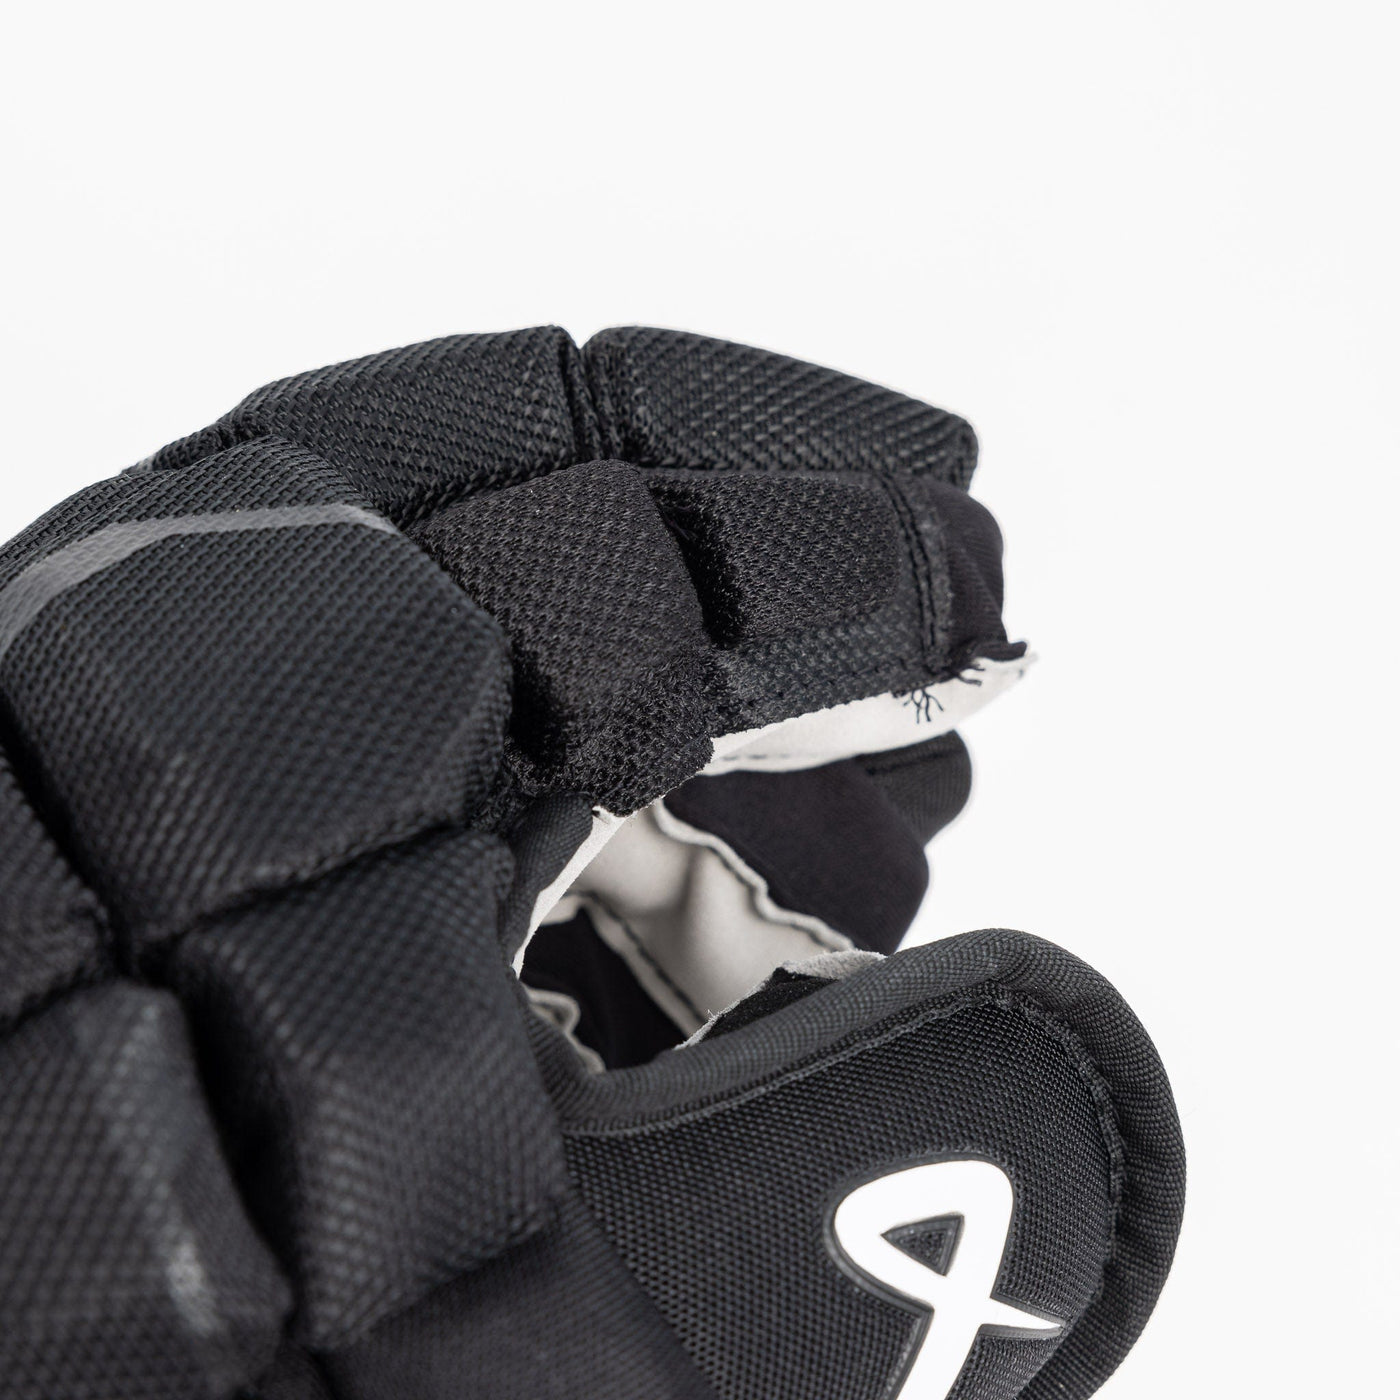 Bauer Supreme Mach Intermediate Hockey Gloves - The Hockey Shop Source For Sports